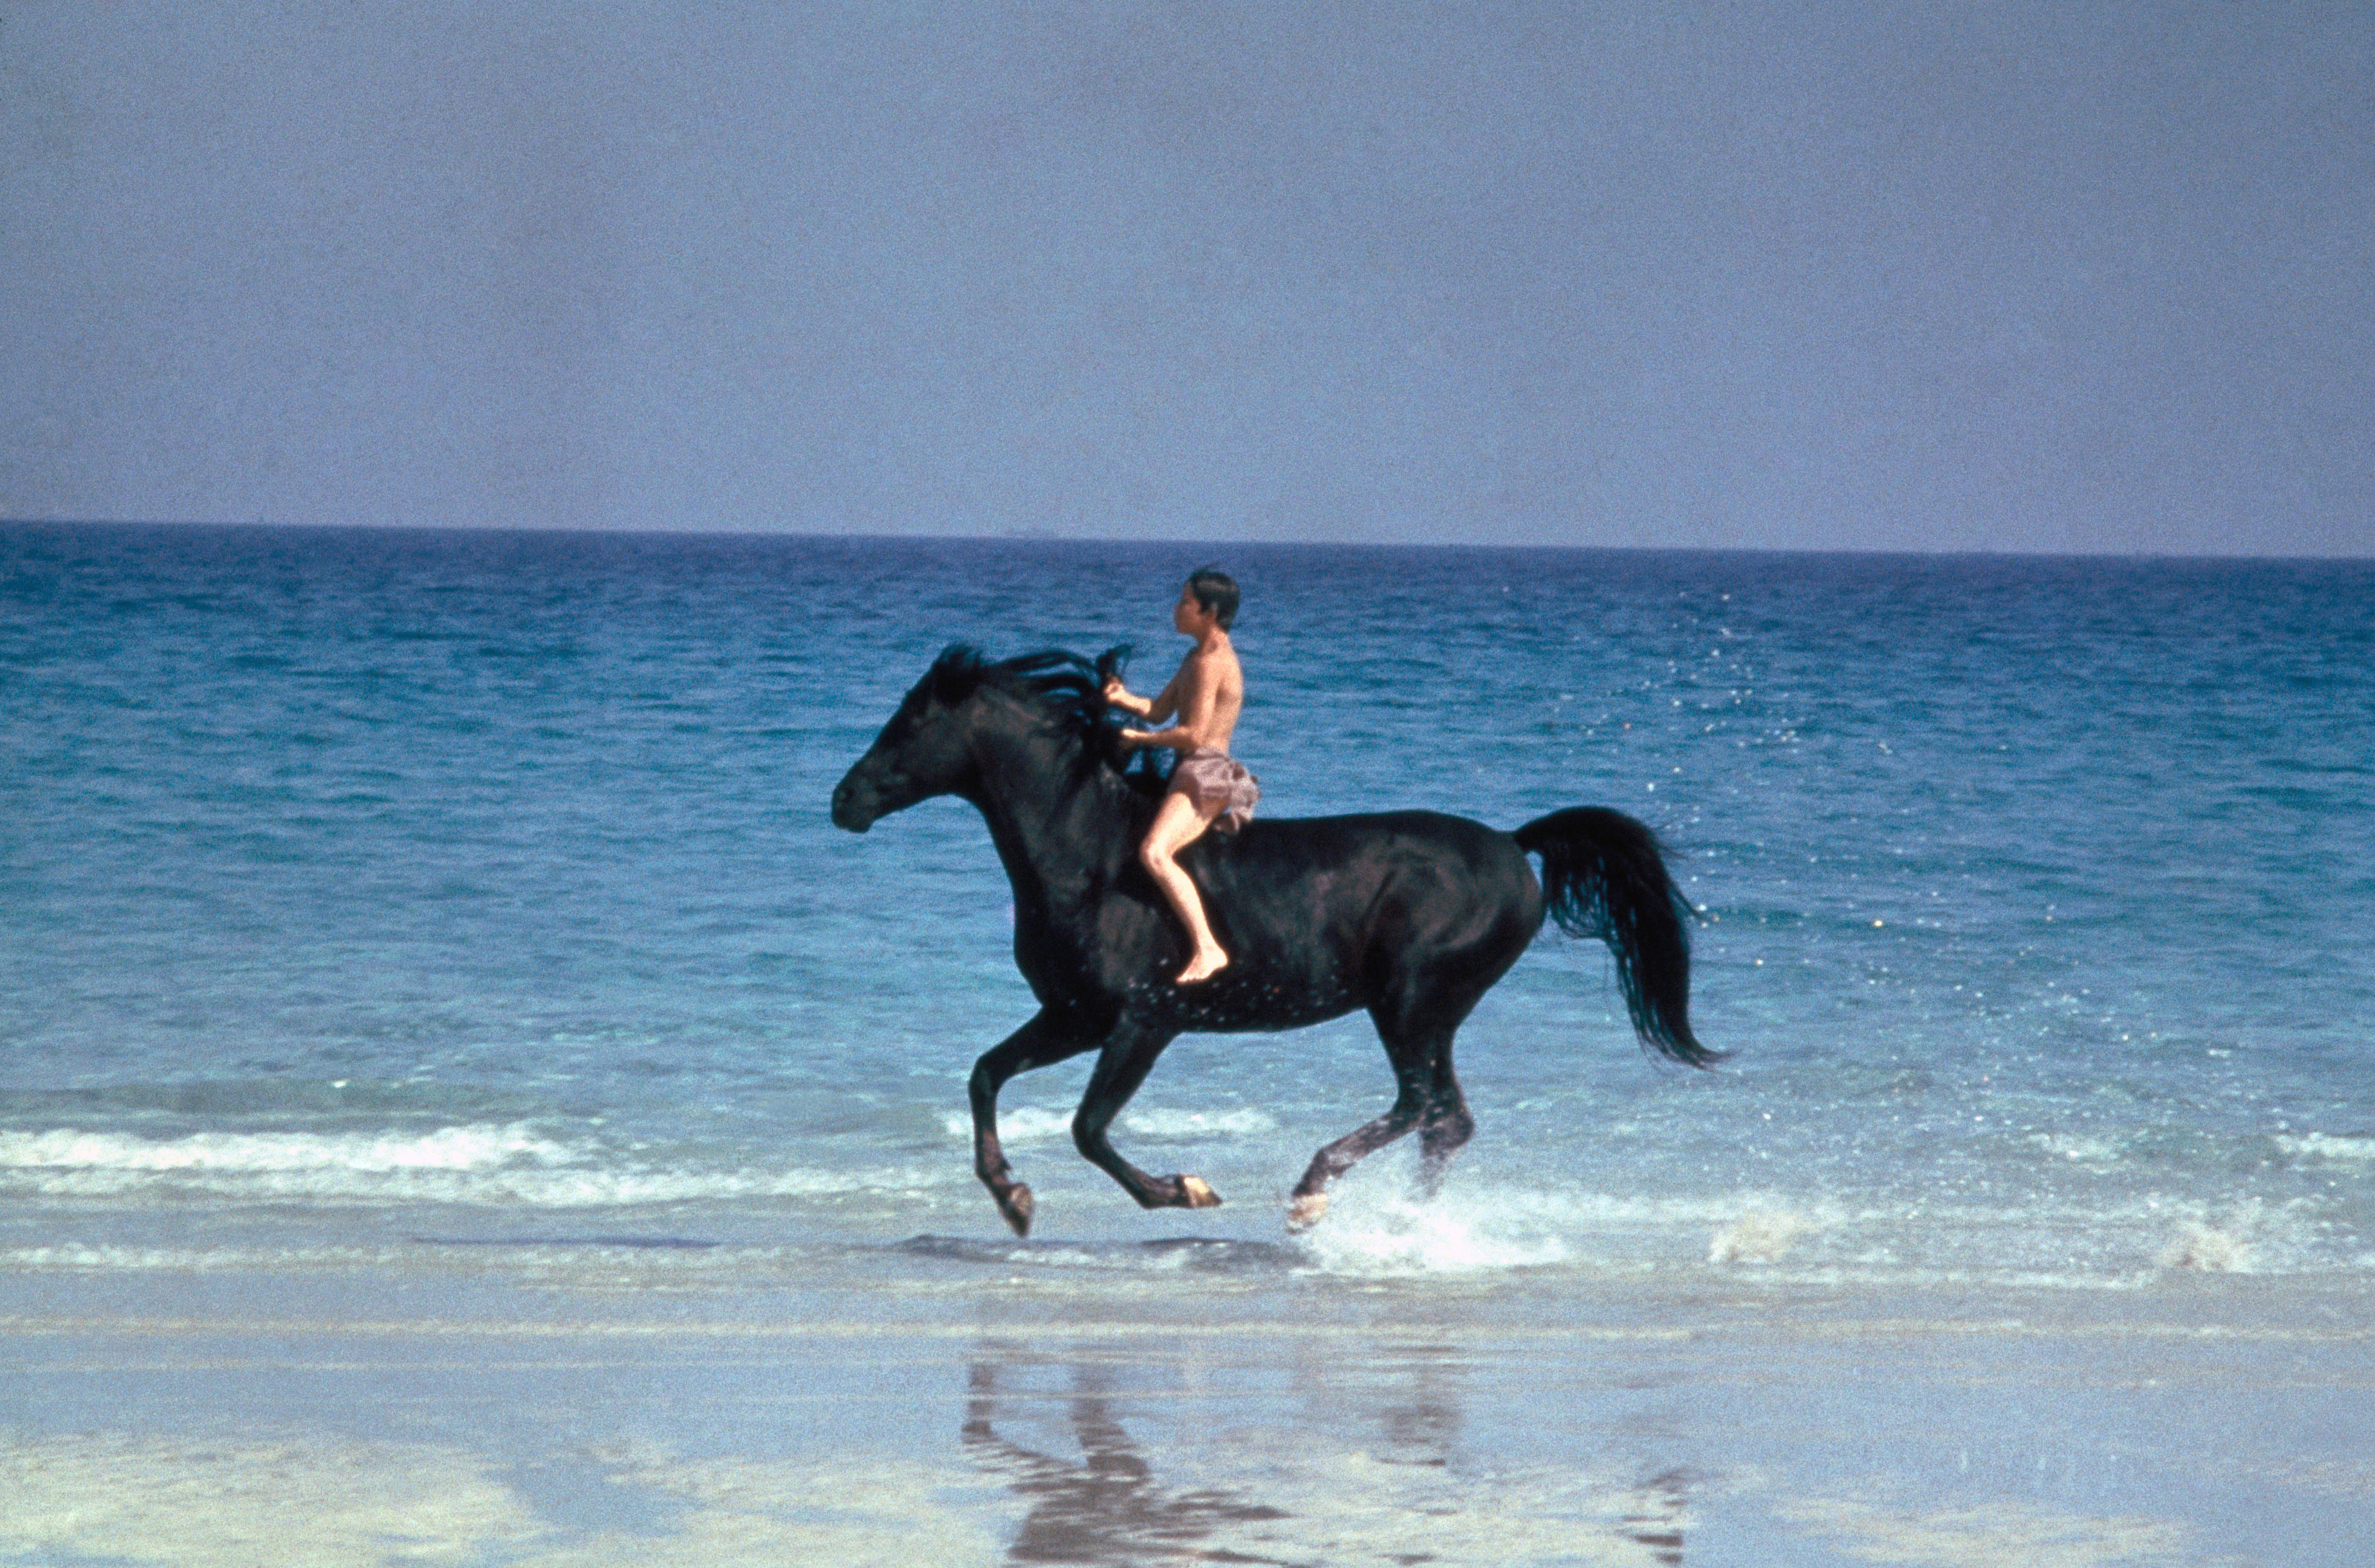 From Black Stallion: a boy rides a black horse on a beach against an ocean background